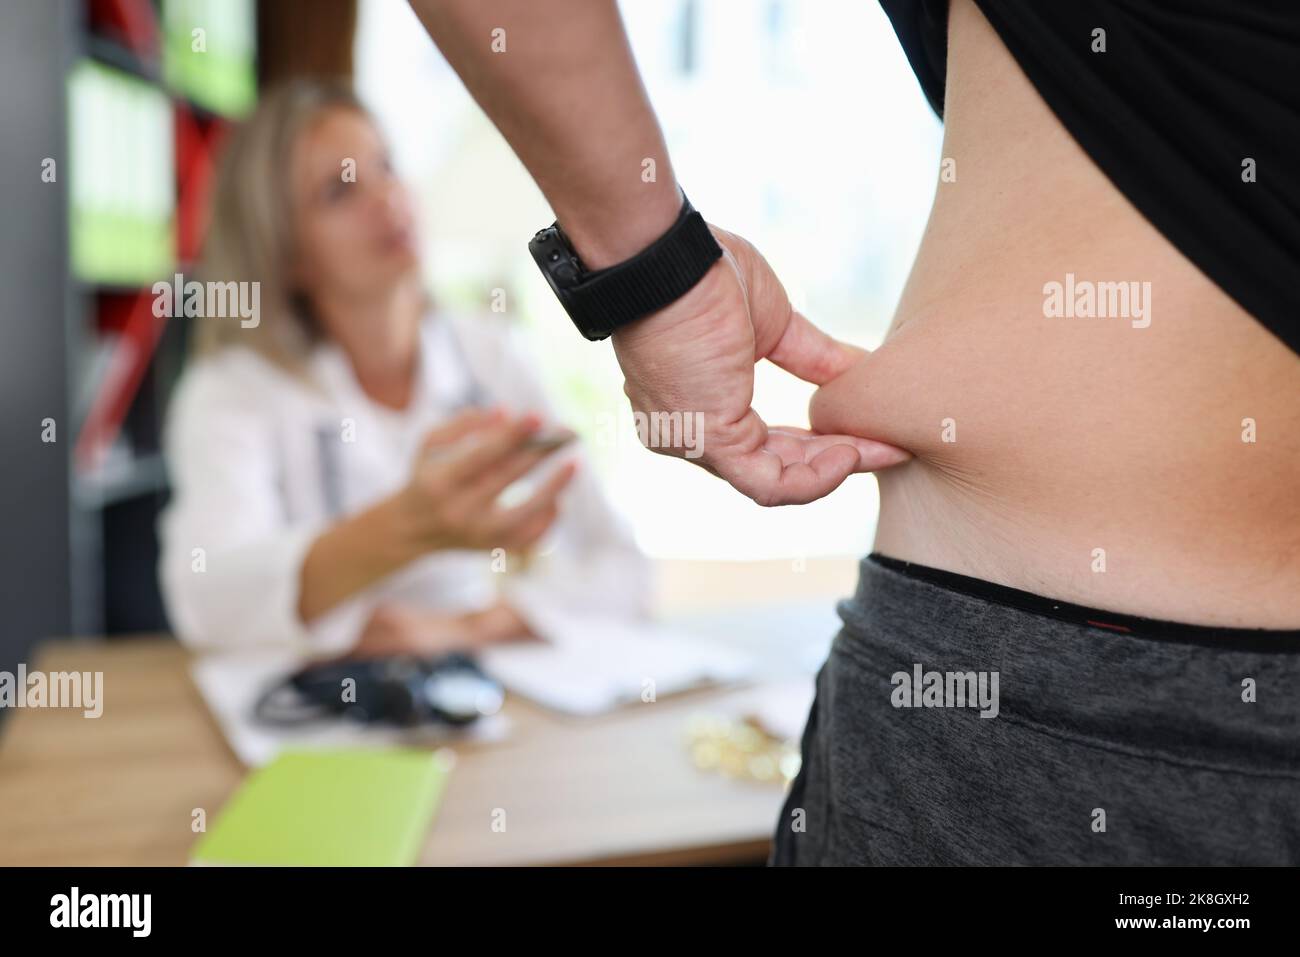 Man pulling skin on abdomen, showing body fat in abdominal area Stock Photo